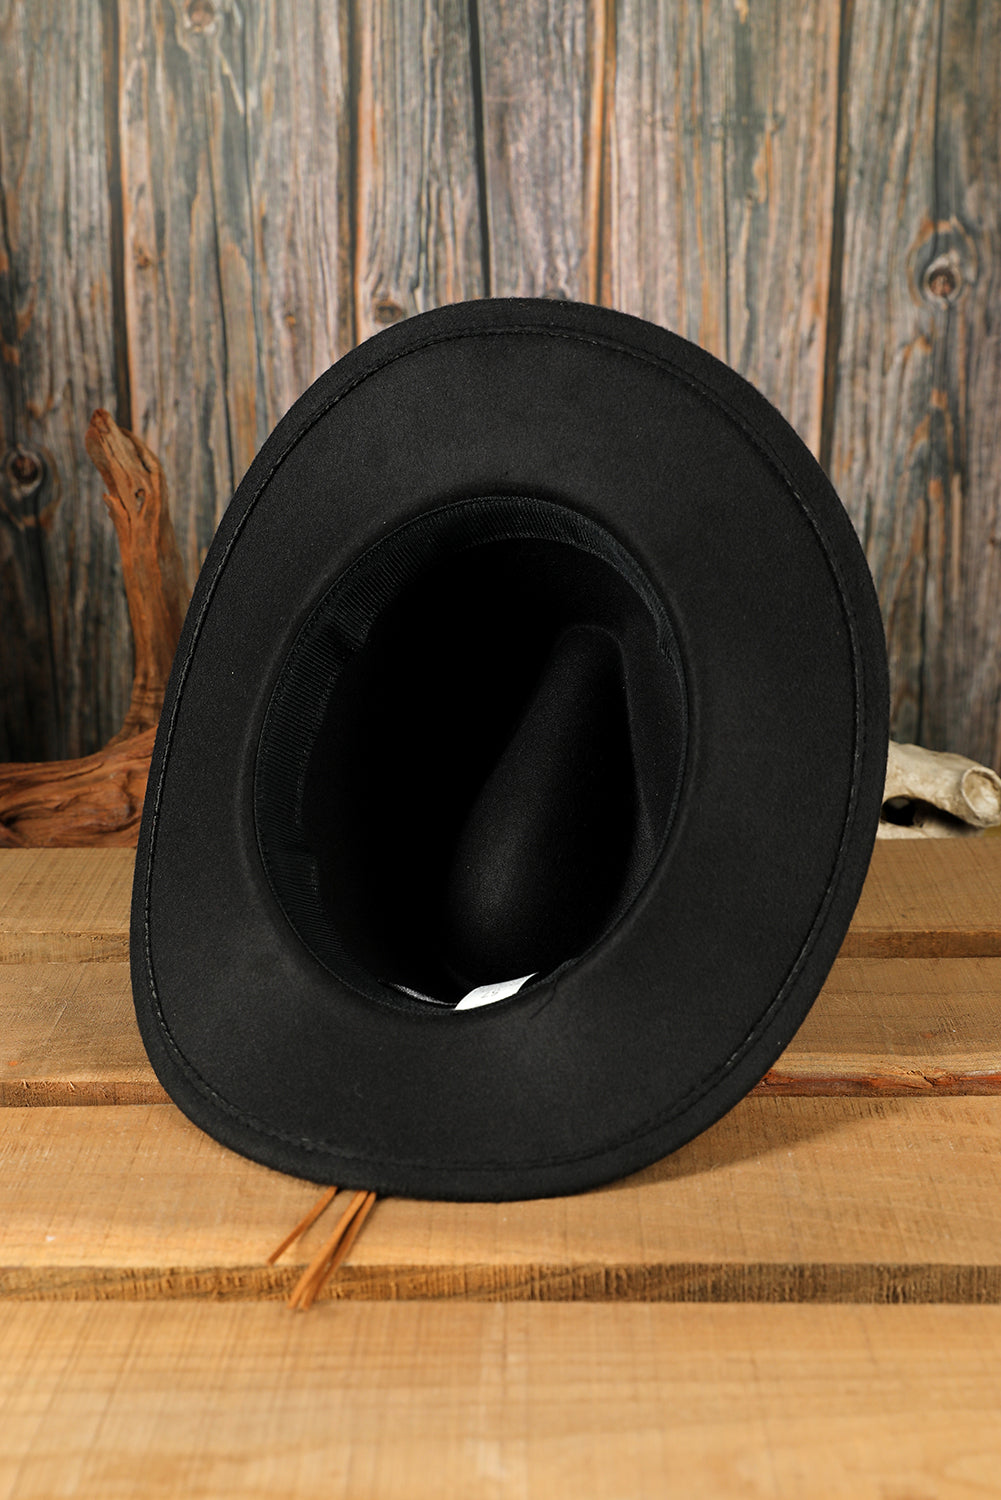 Black Metal Cowhead Western Cowboy Hat Hats & Caps JT's Designer Fashion